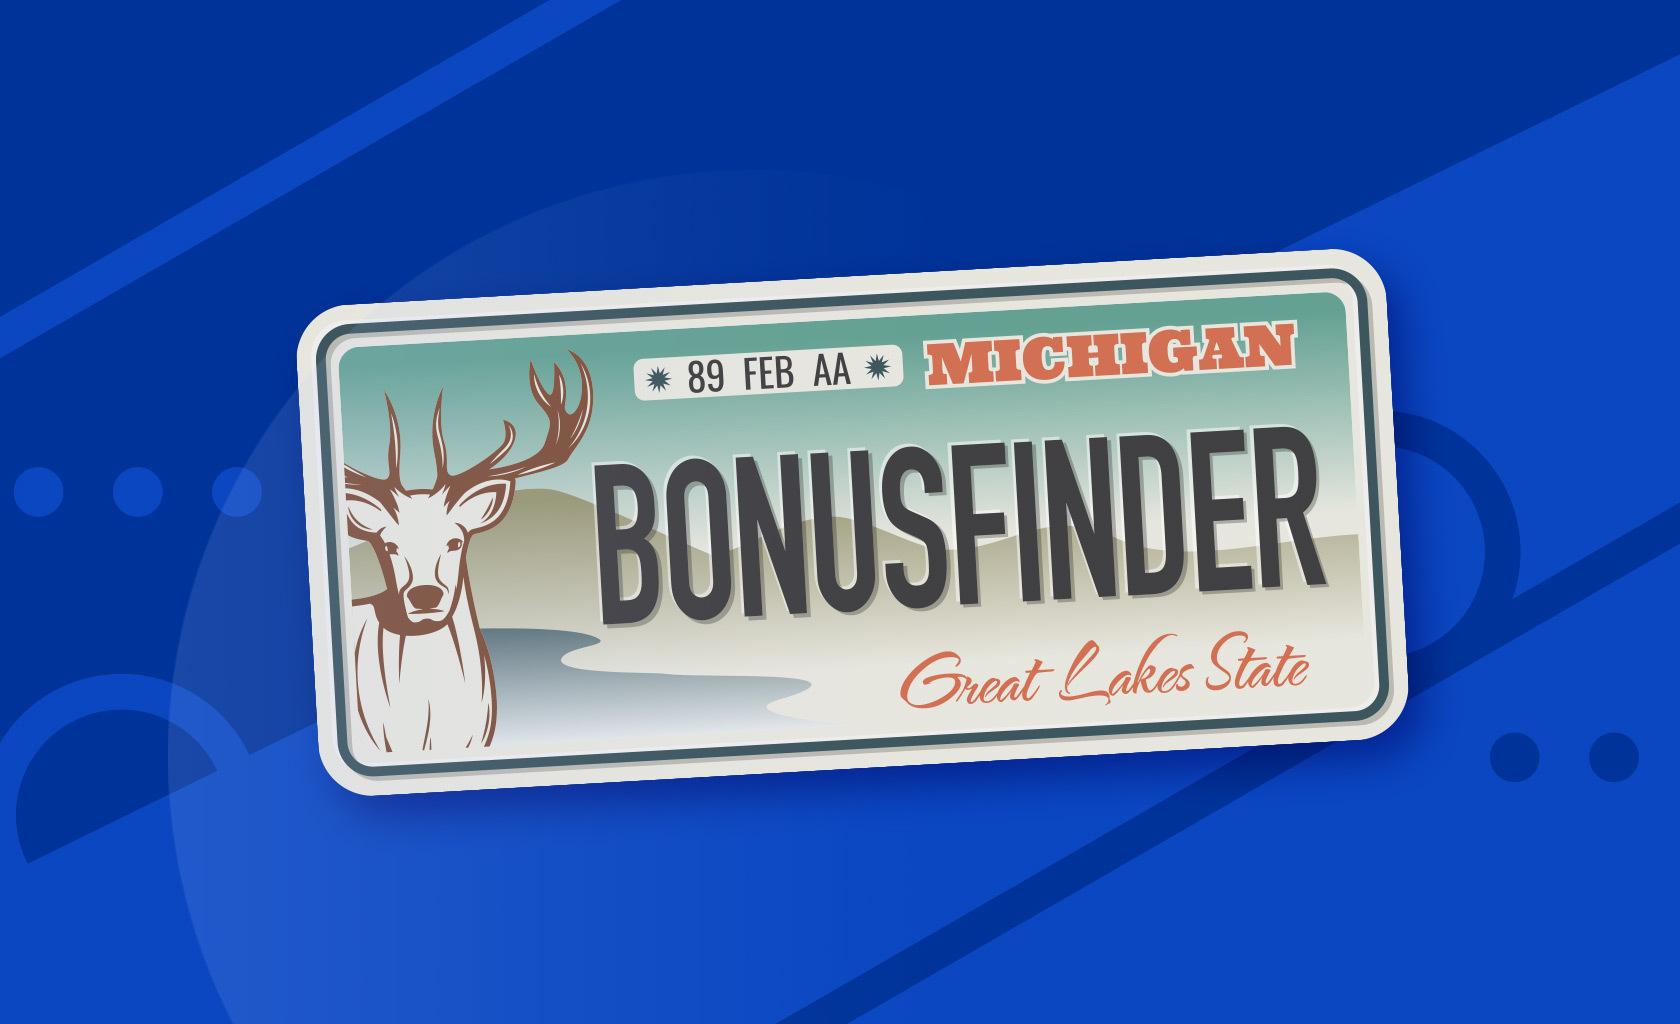 BonusFinder granted Michigan licence